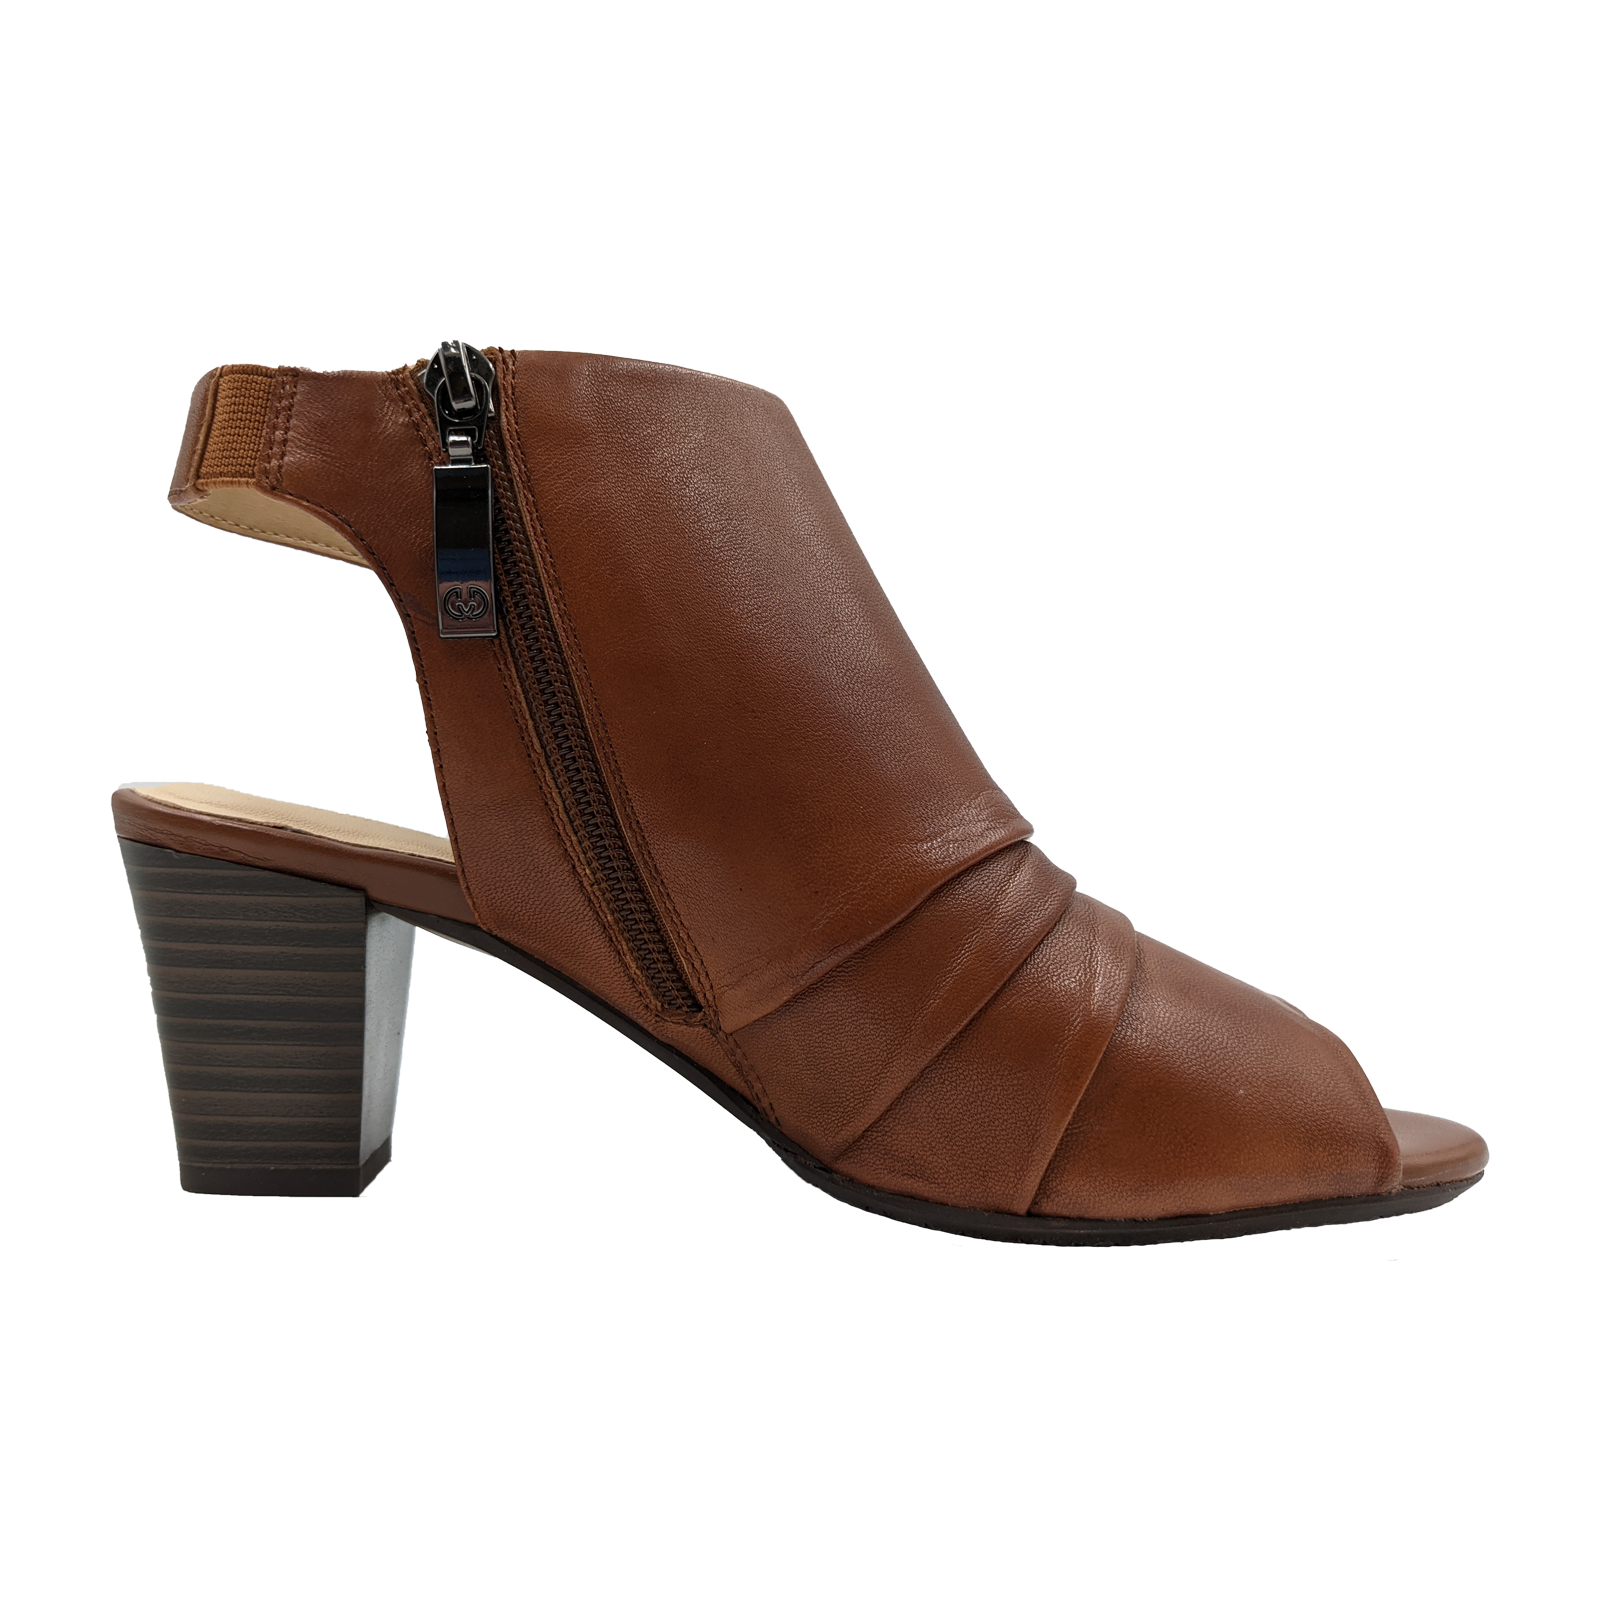 Gerry Weber Lotta G13018 (Women) - Cognac Sandals - Heeled - The Heel Shoe Fitters